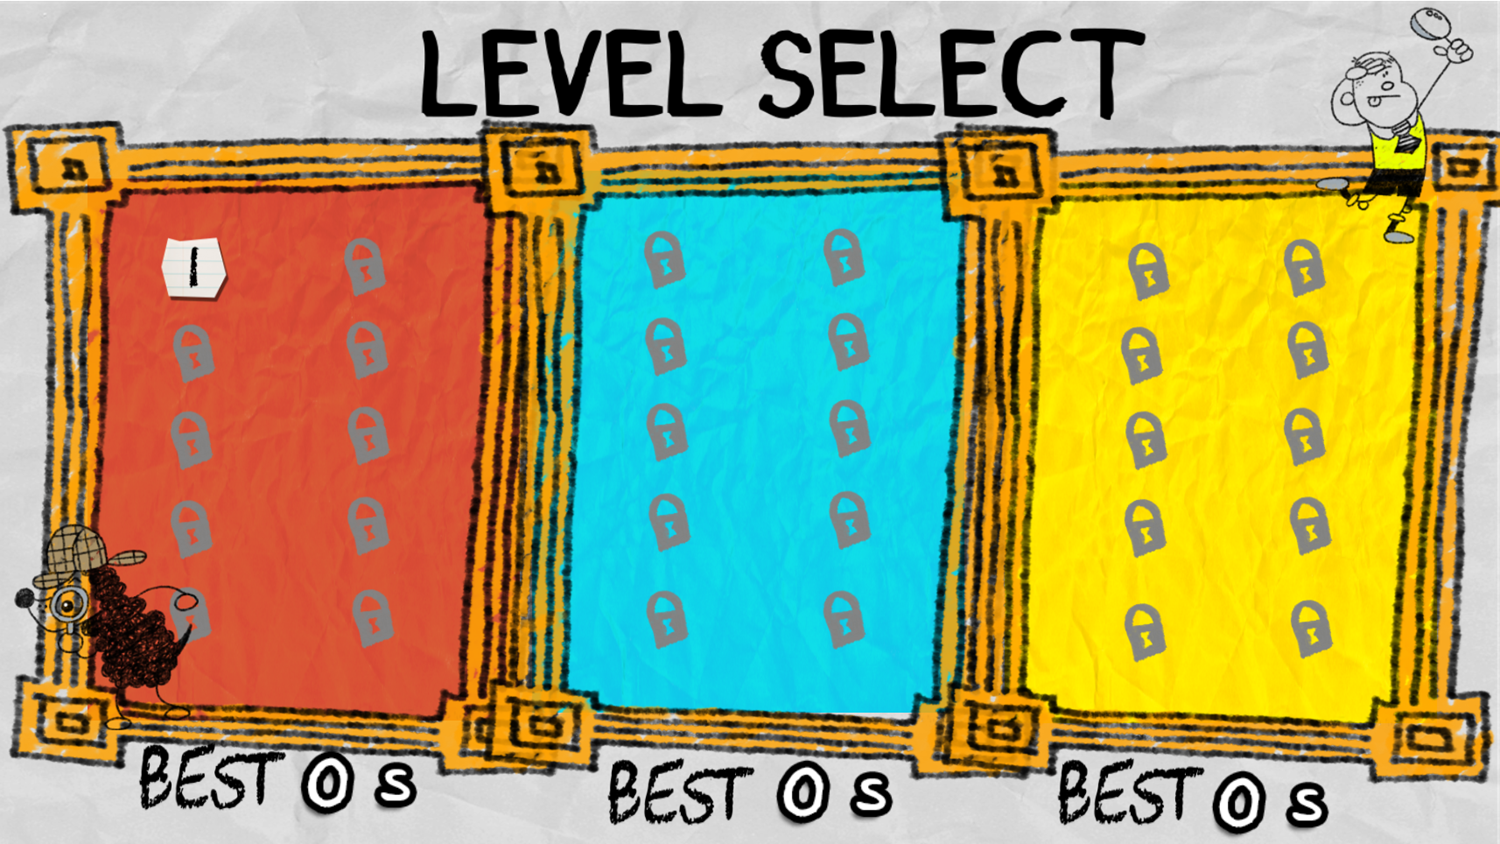 The Bash Street Sketch Book Game Level Select Screenshot.